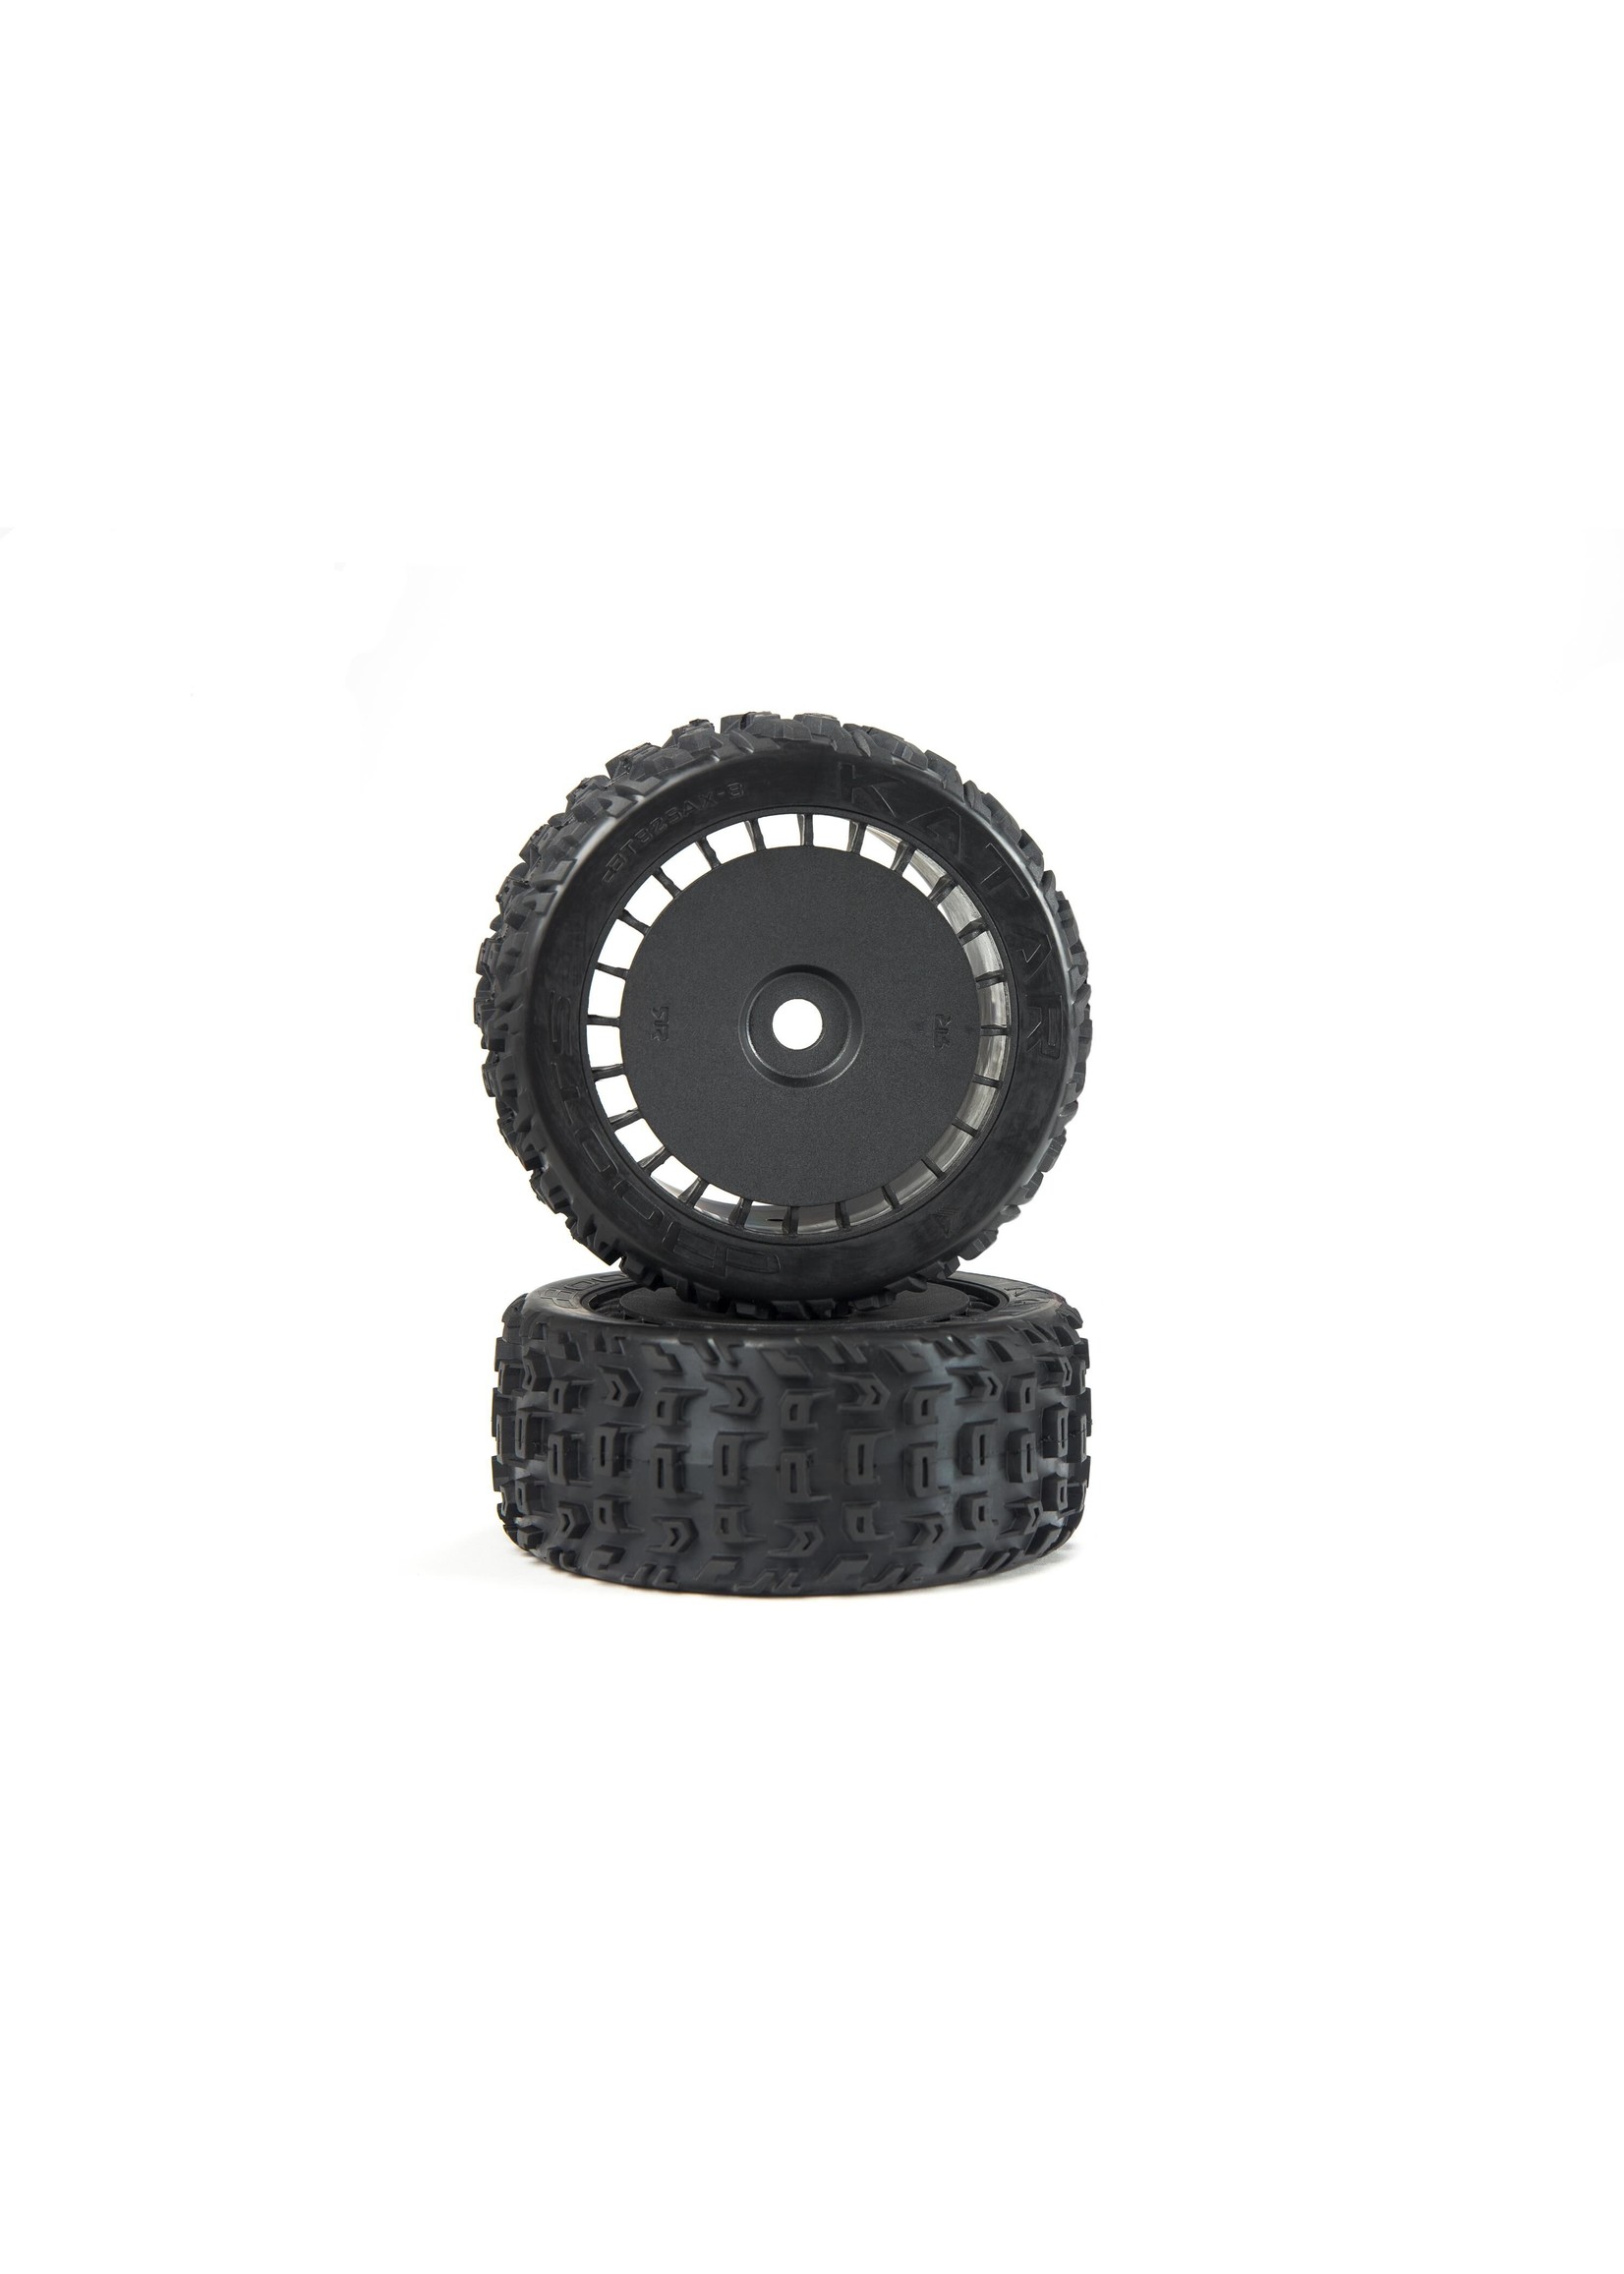 Arrma ARA550097 - dBoots Katar T Belted 6S Tire Set Glued - Black (2)